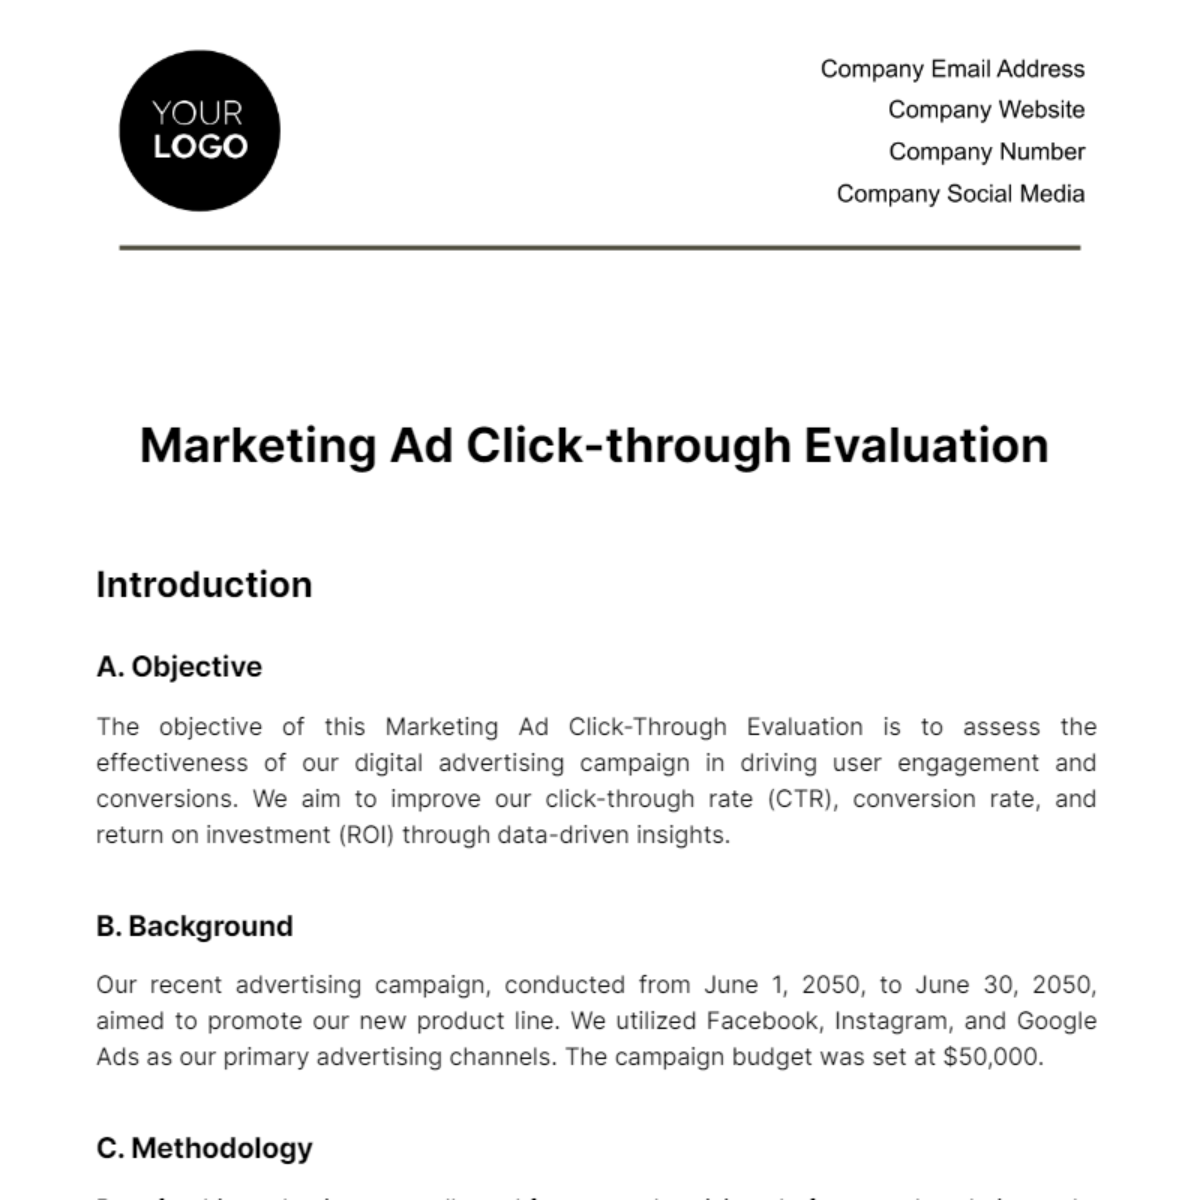 Marketing Ad Click-through Evaluation Template